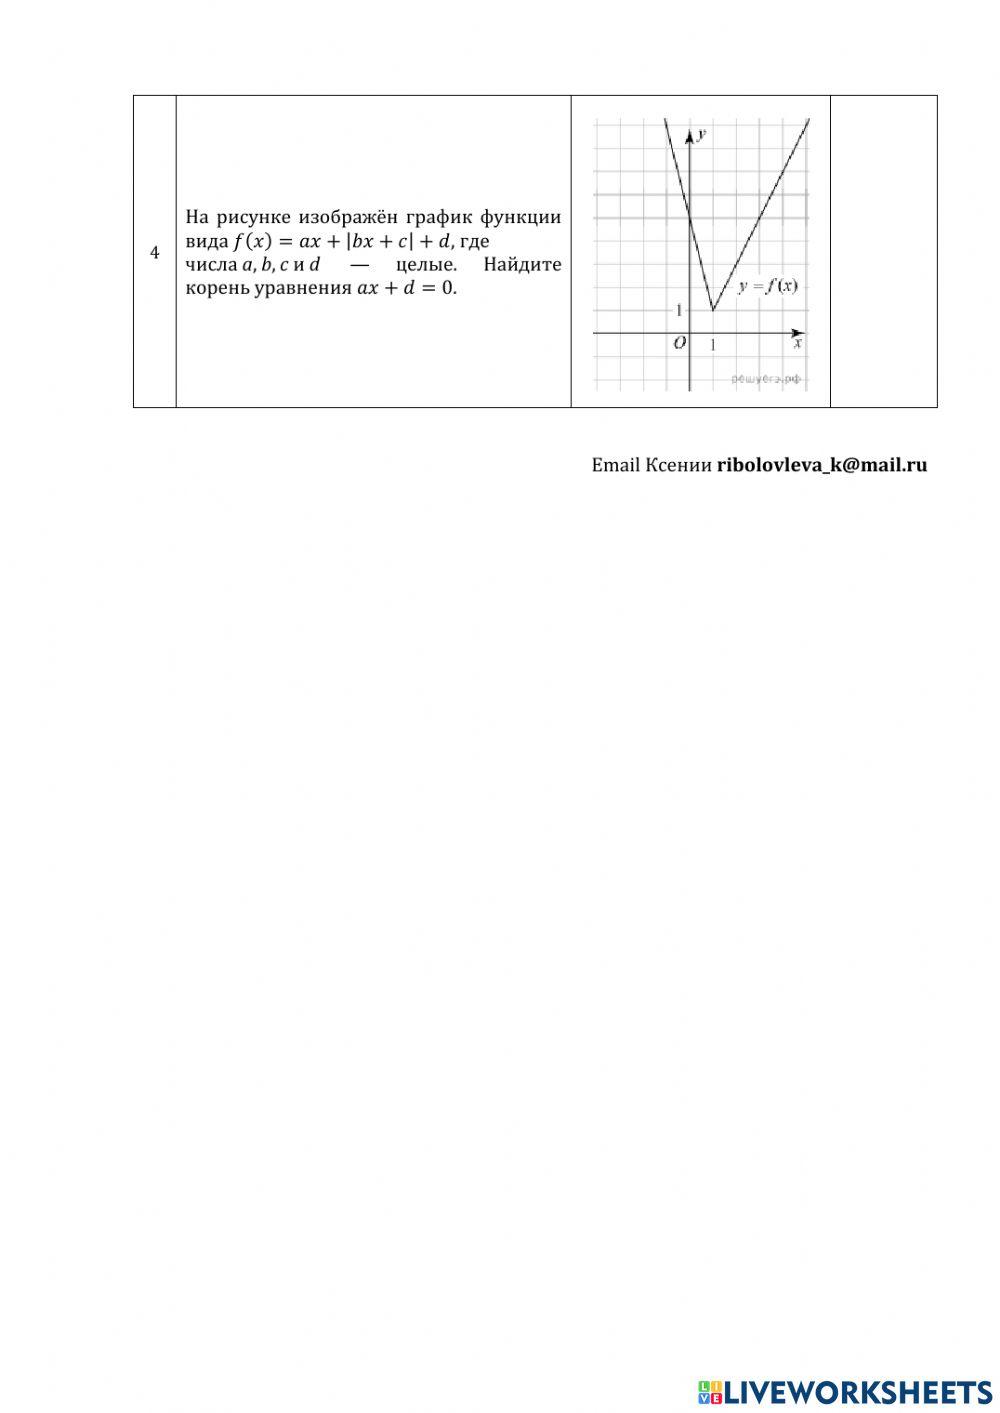 ДЗ 20: графики функций.